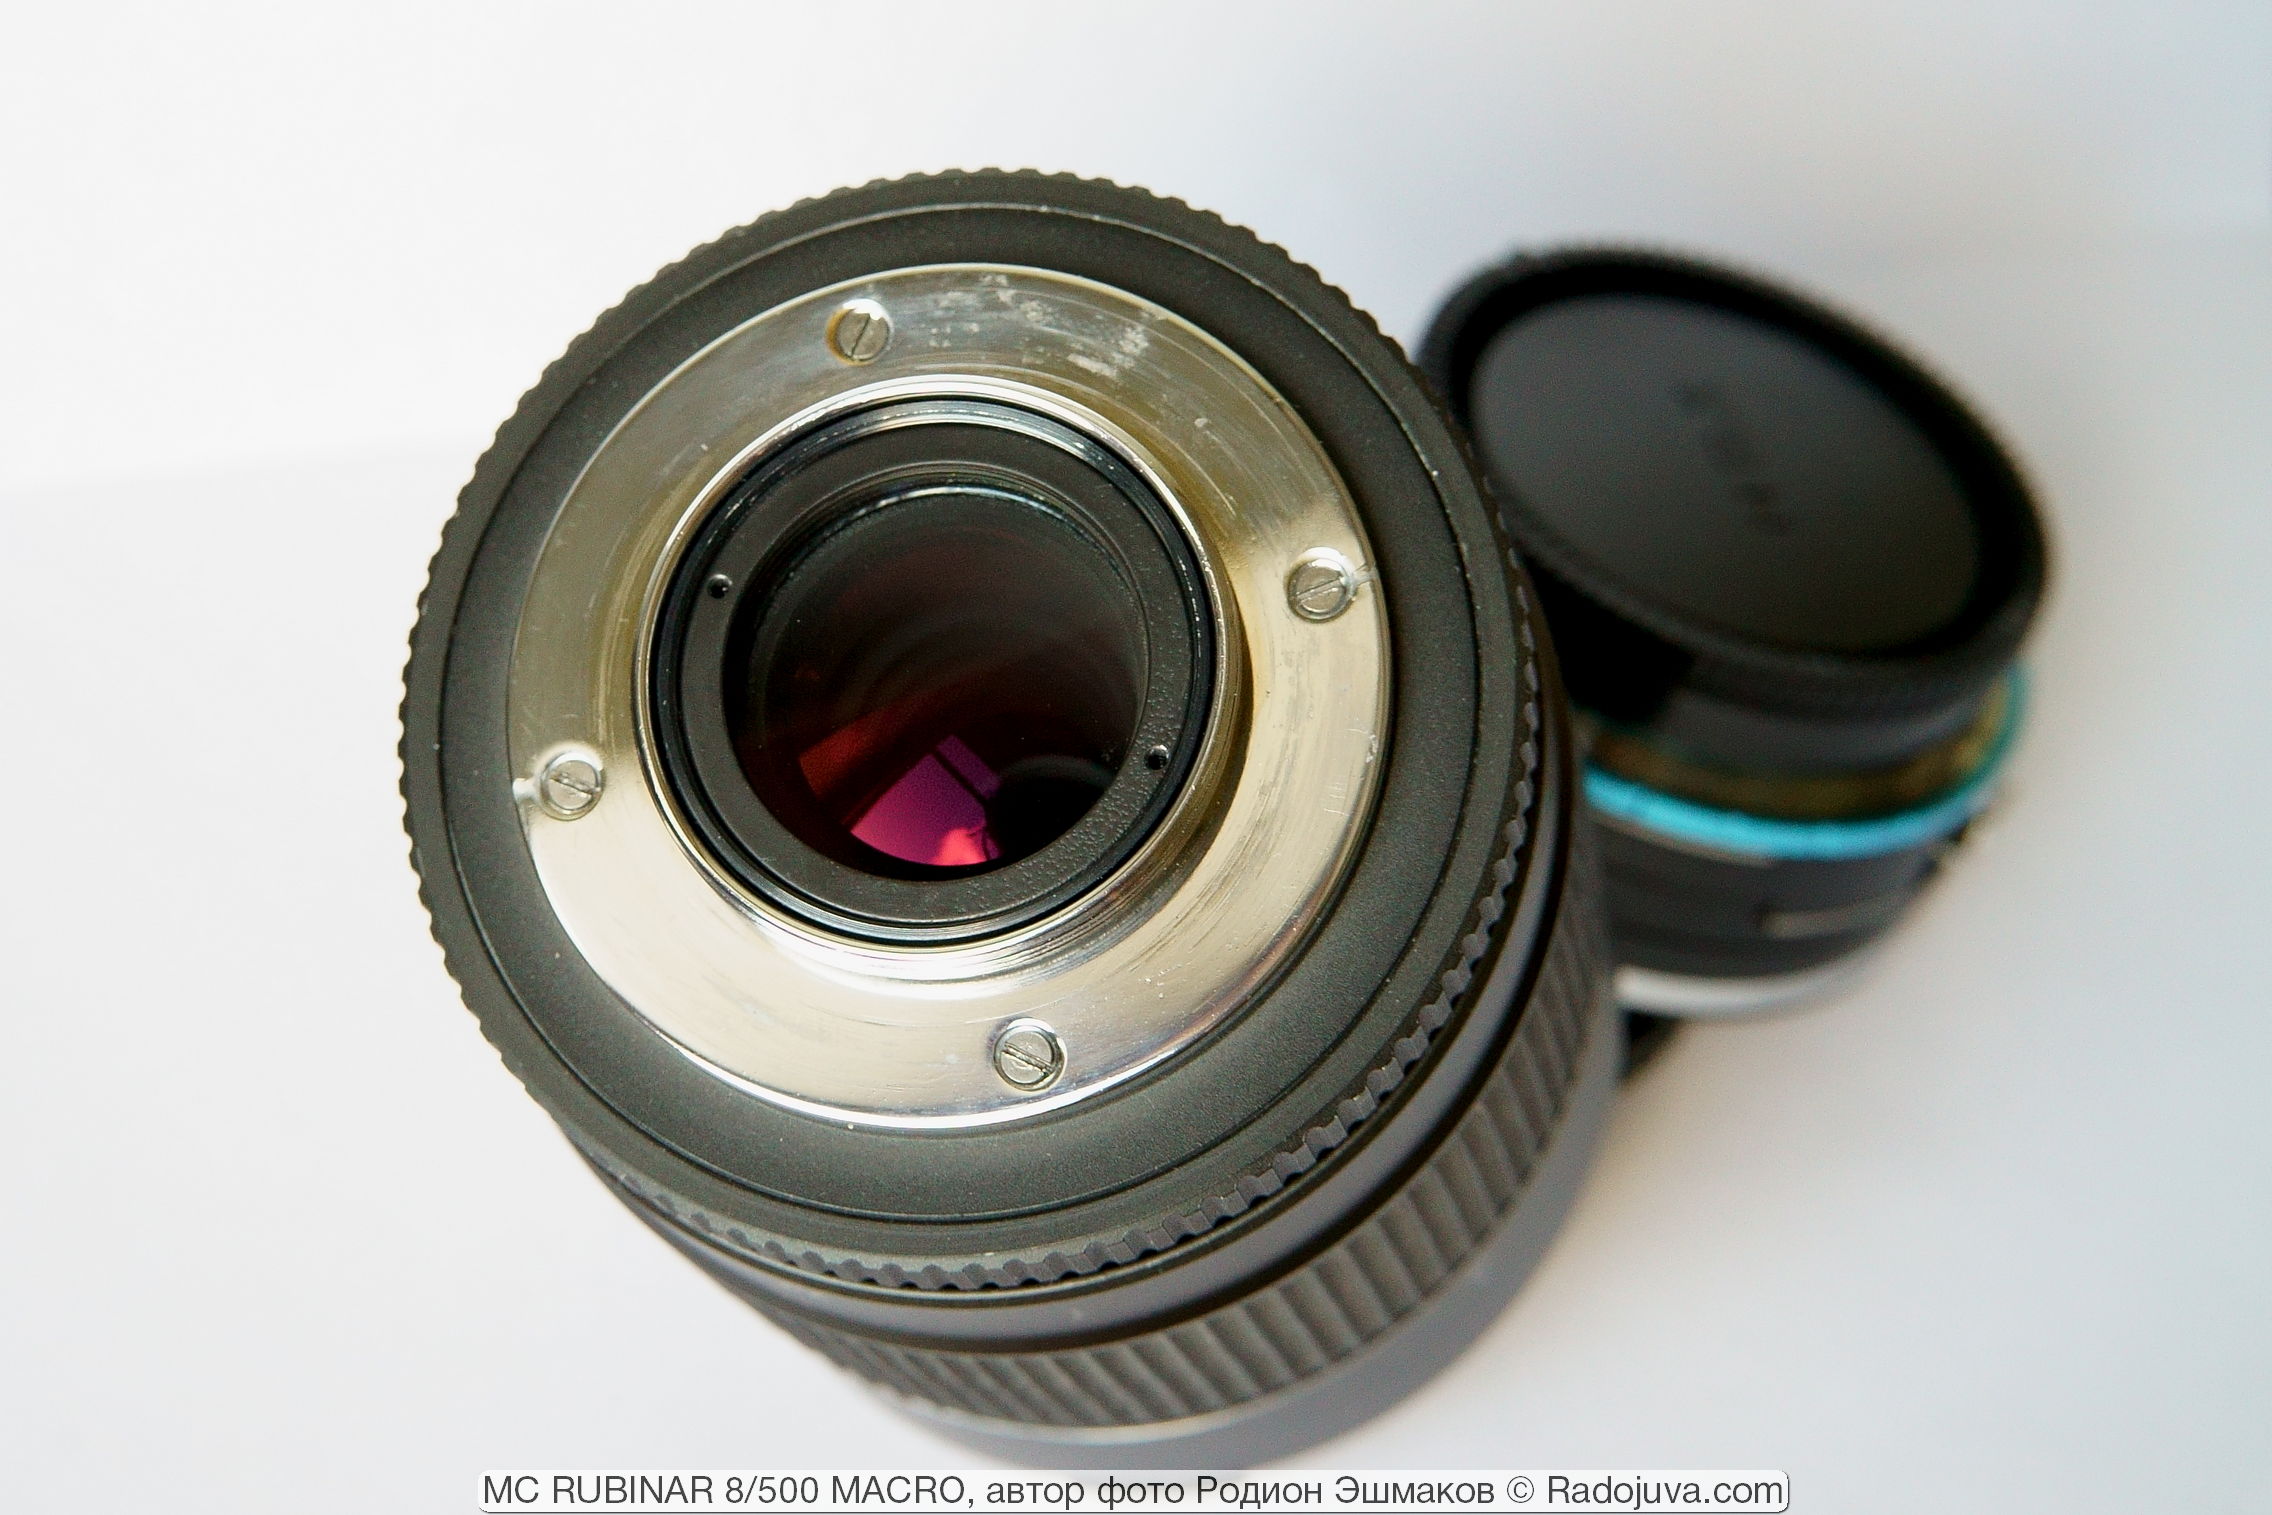 Shank with M42 thread and lens near-focal field corrector.